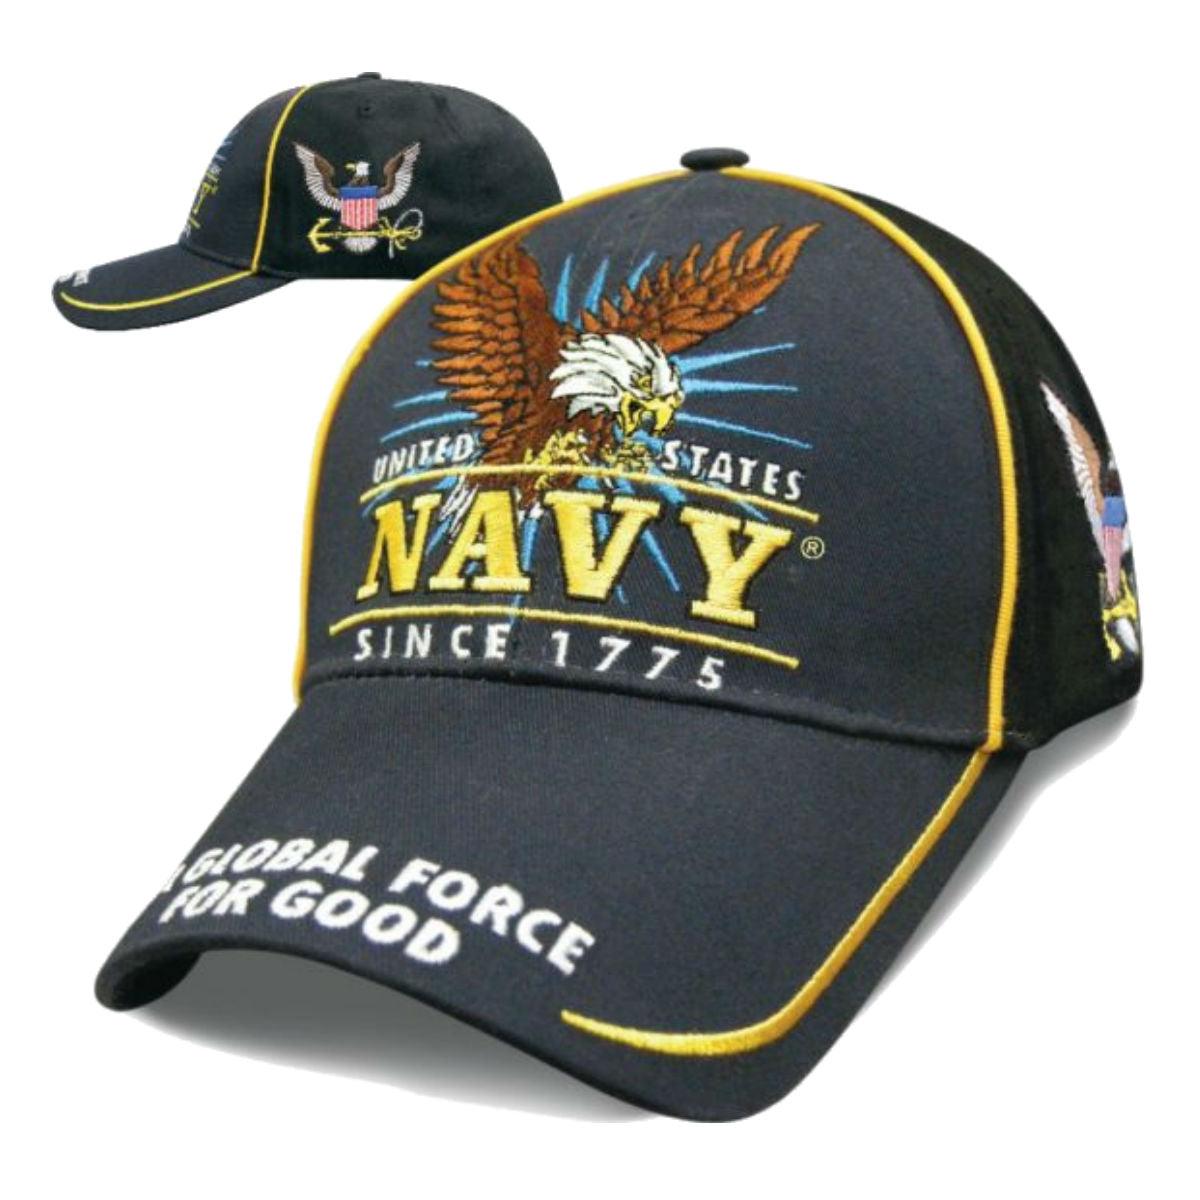 Daniel Smart Victory - Navy Hat, Unisex, Navy Blue/Black - American Legend Rider